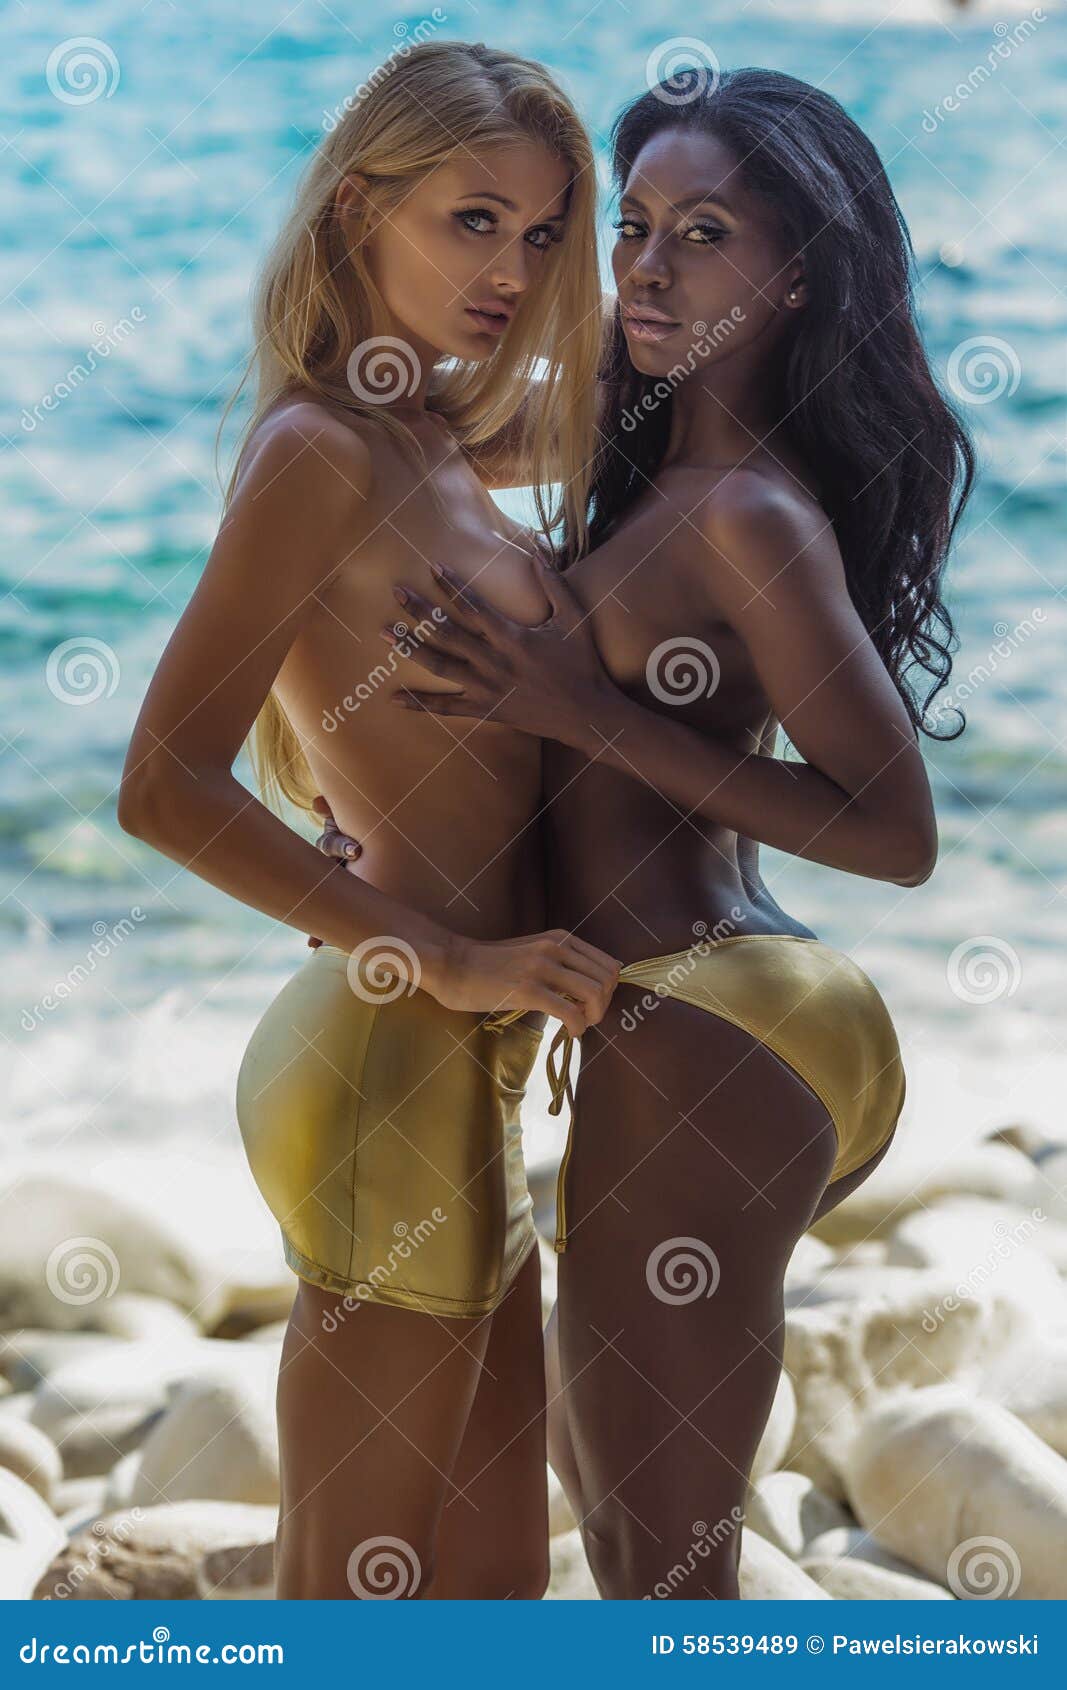 benjamin celis recommends Female Nude Beach Pics